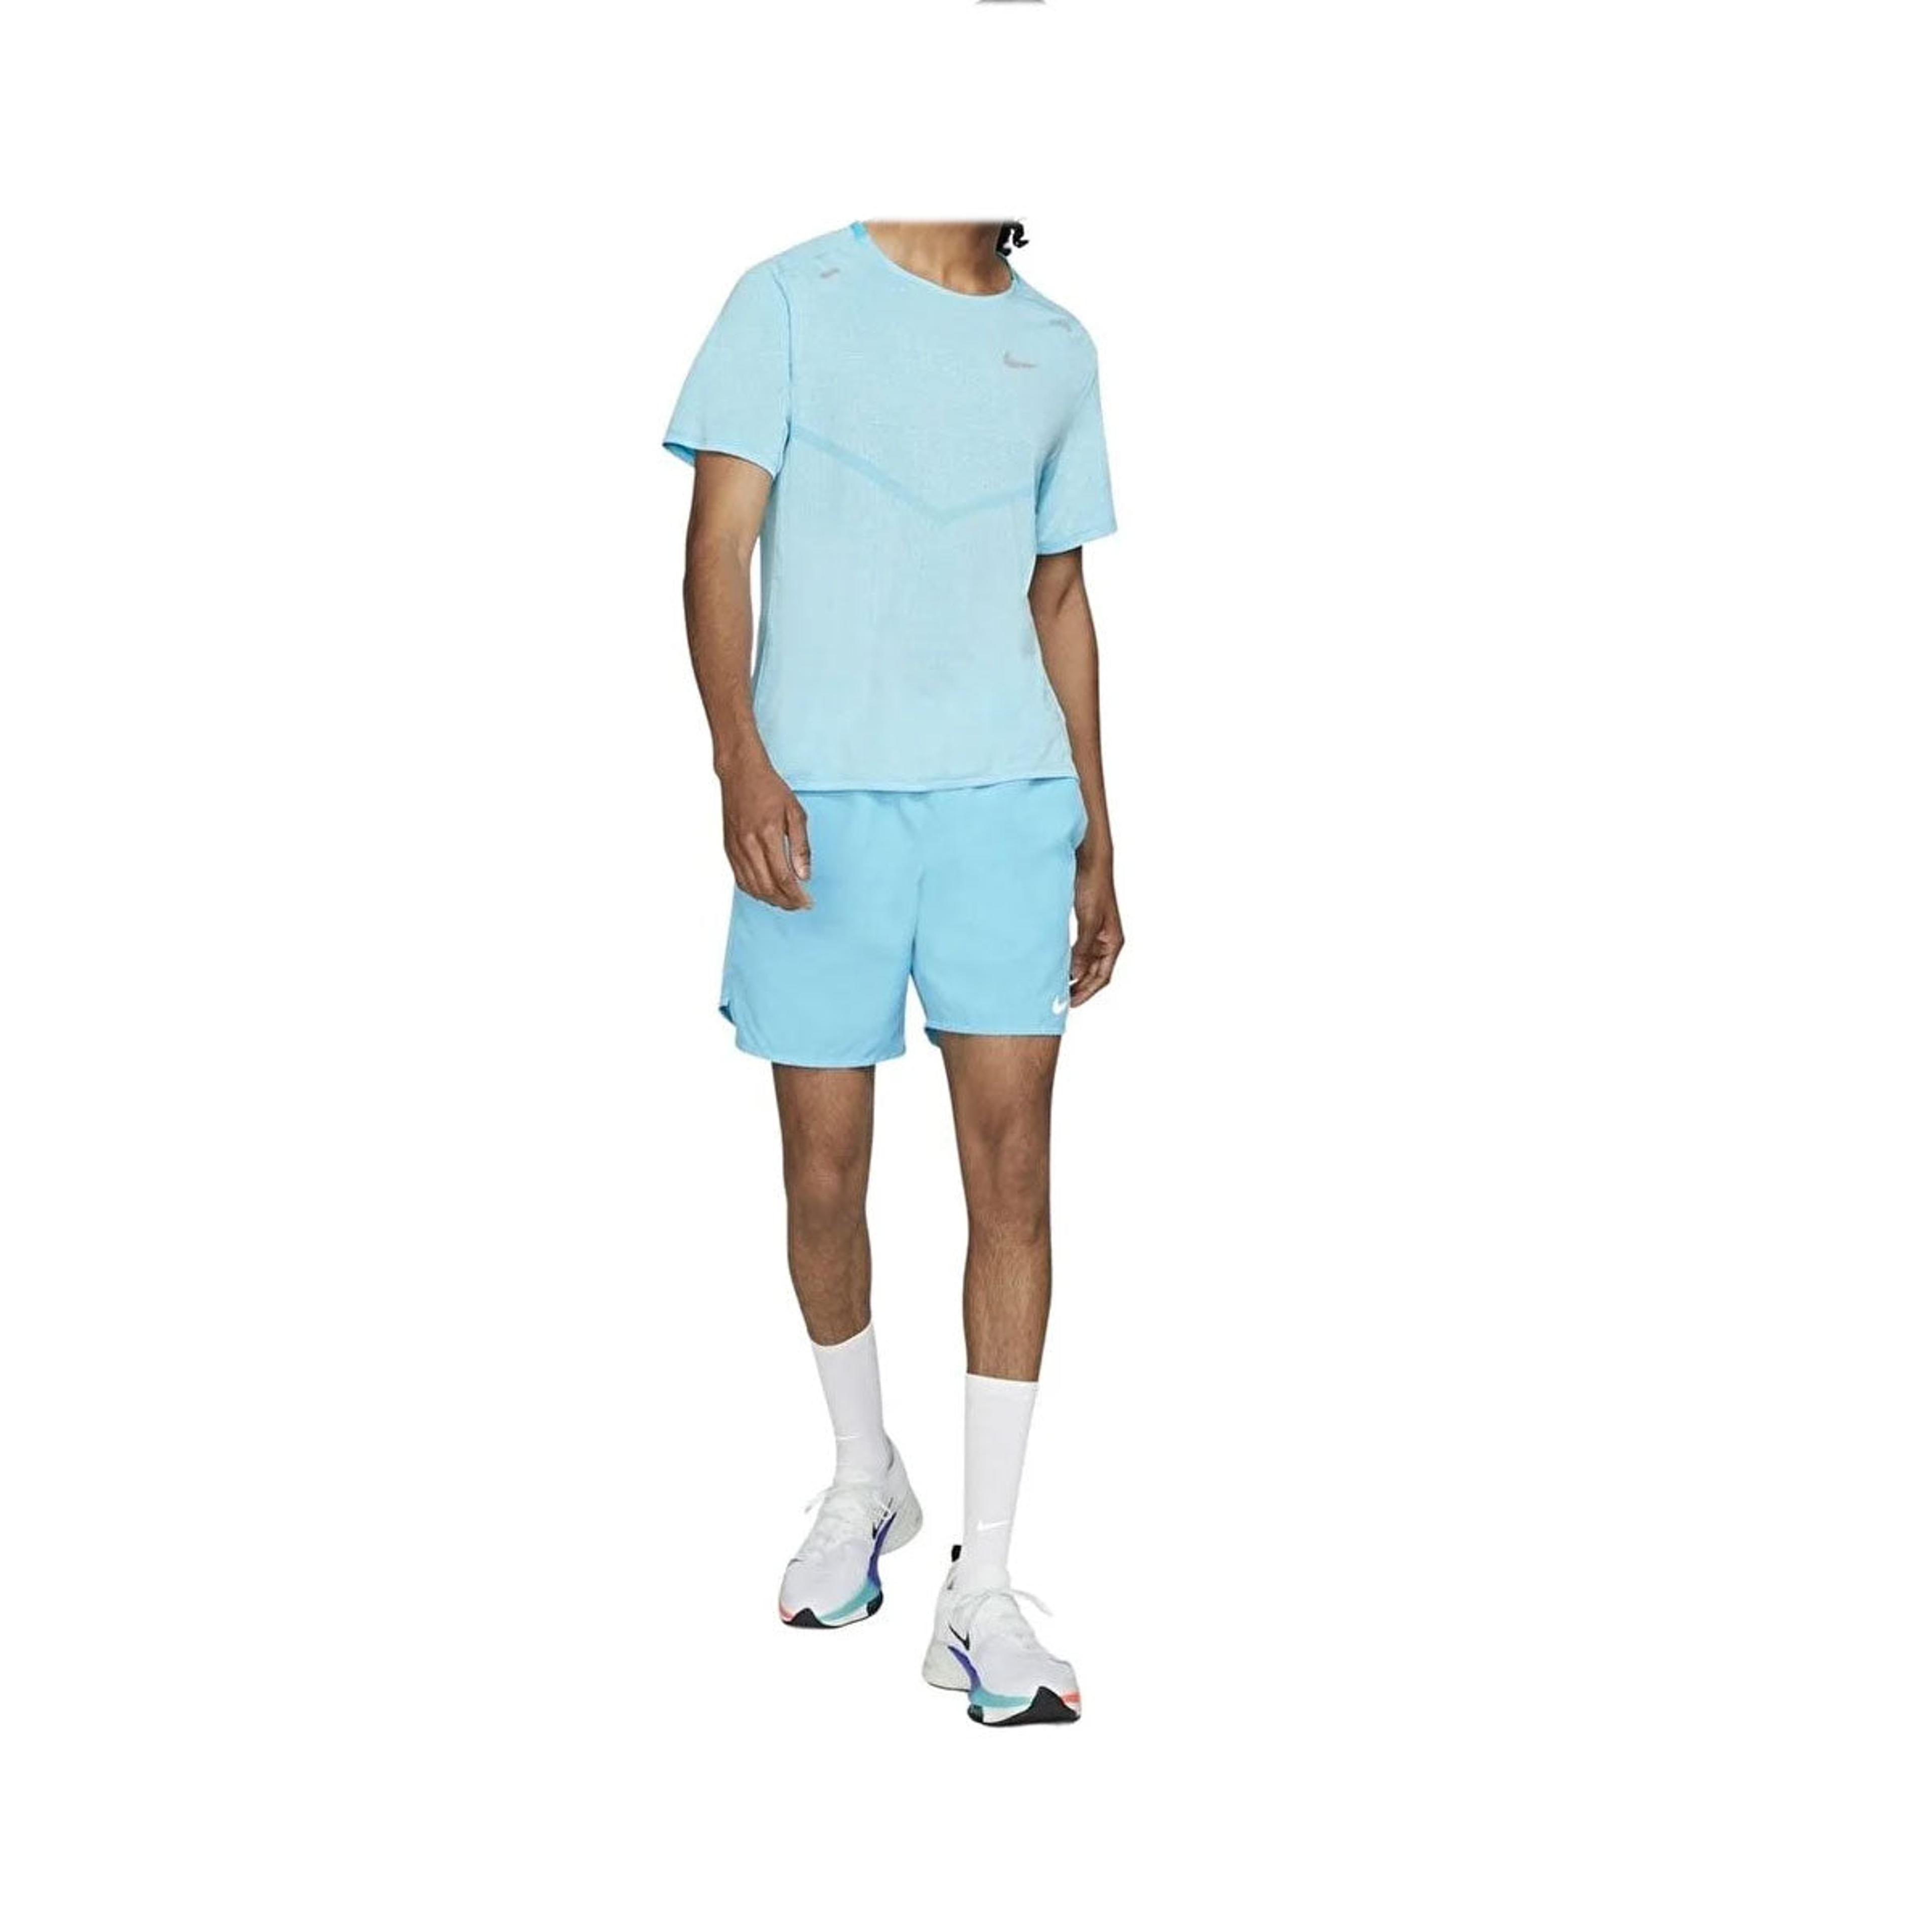 Alternate View 1 of Nike Men's Dri-FIT ADV Run Division TechKnit Short-Sleeve Blue